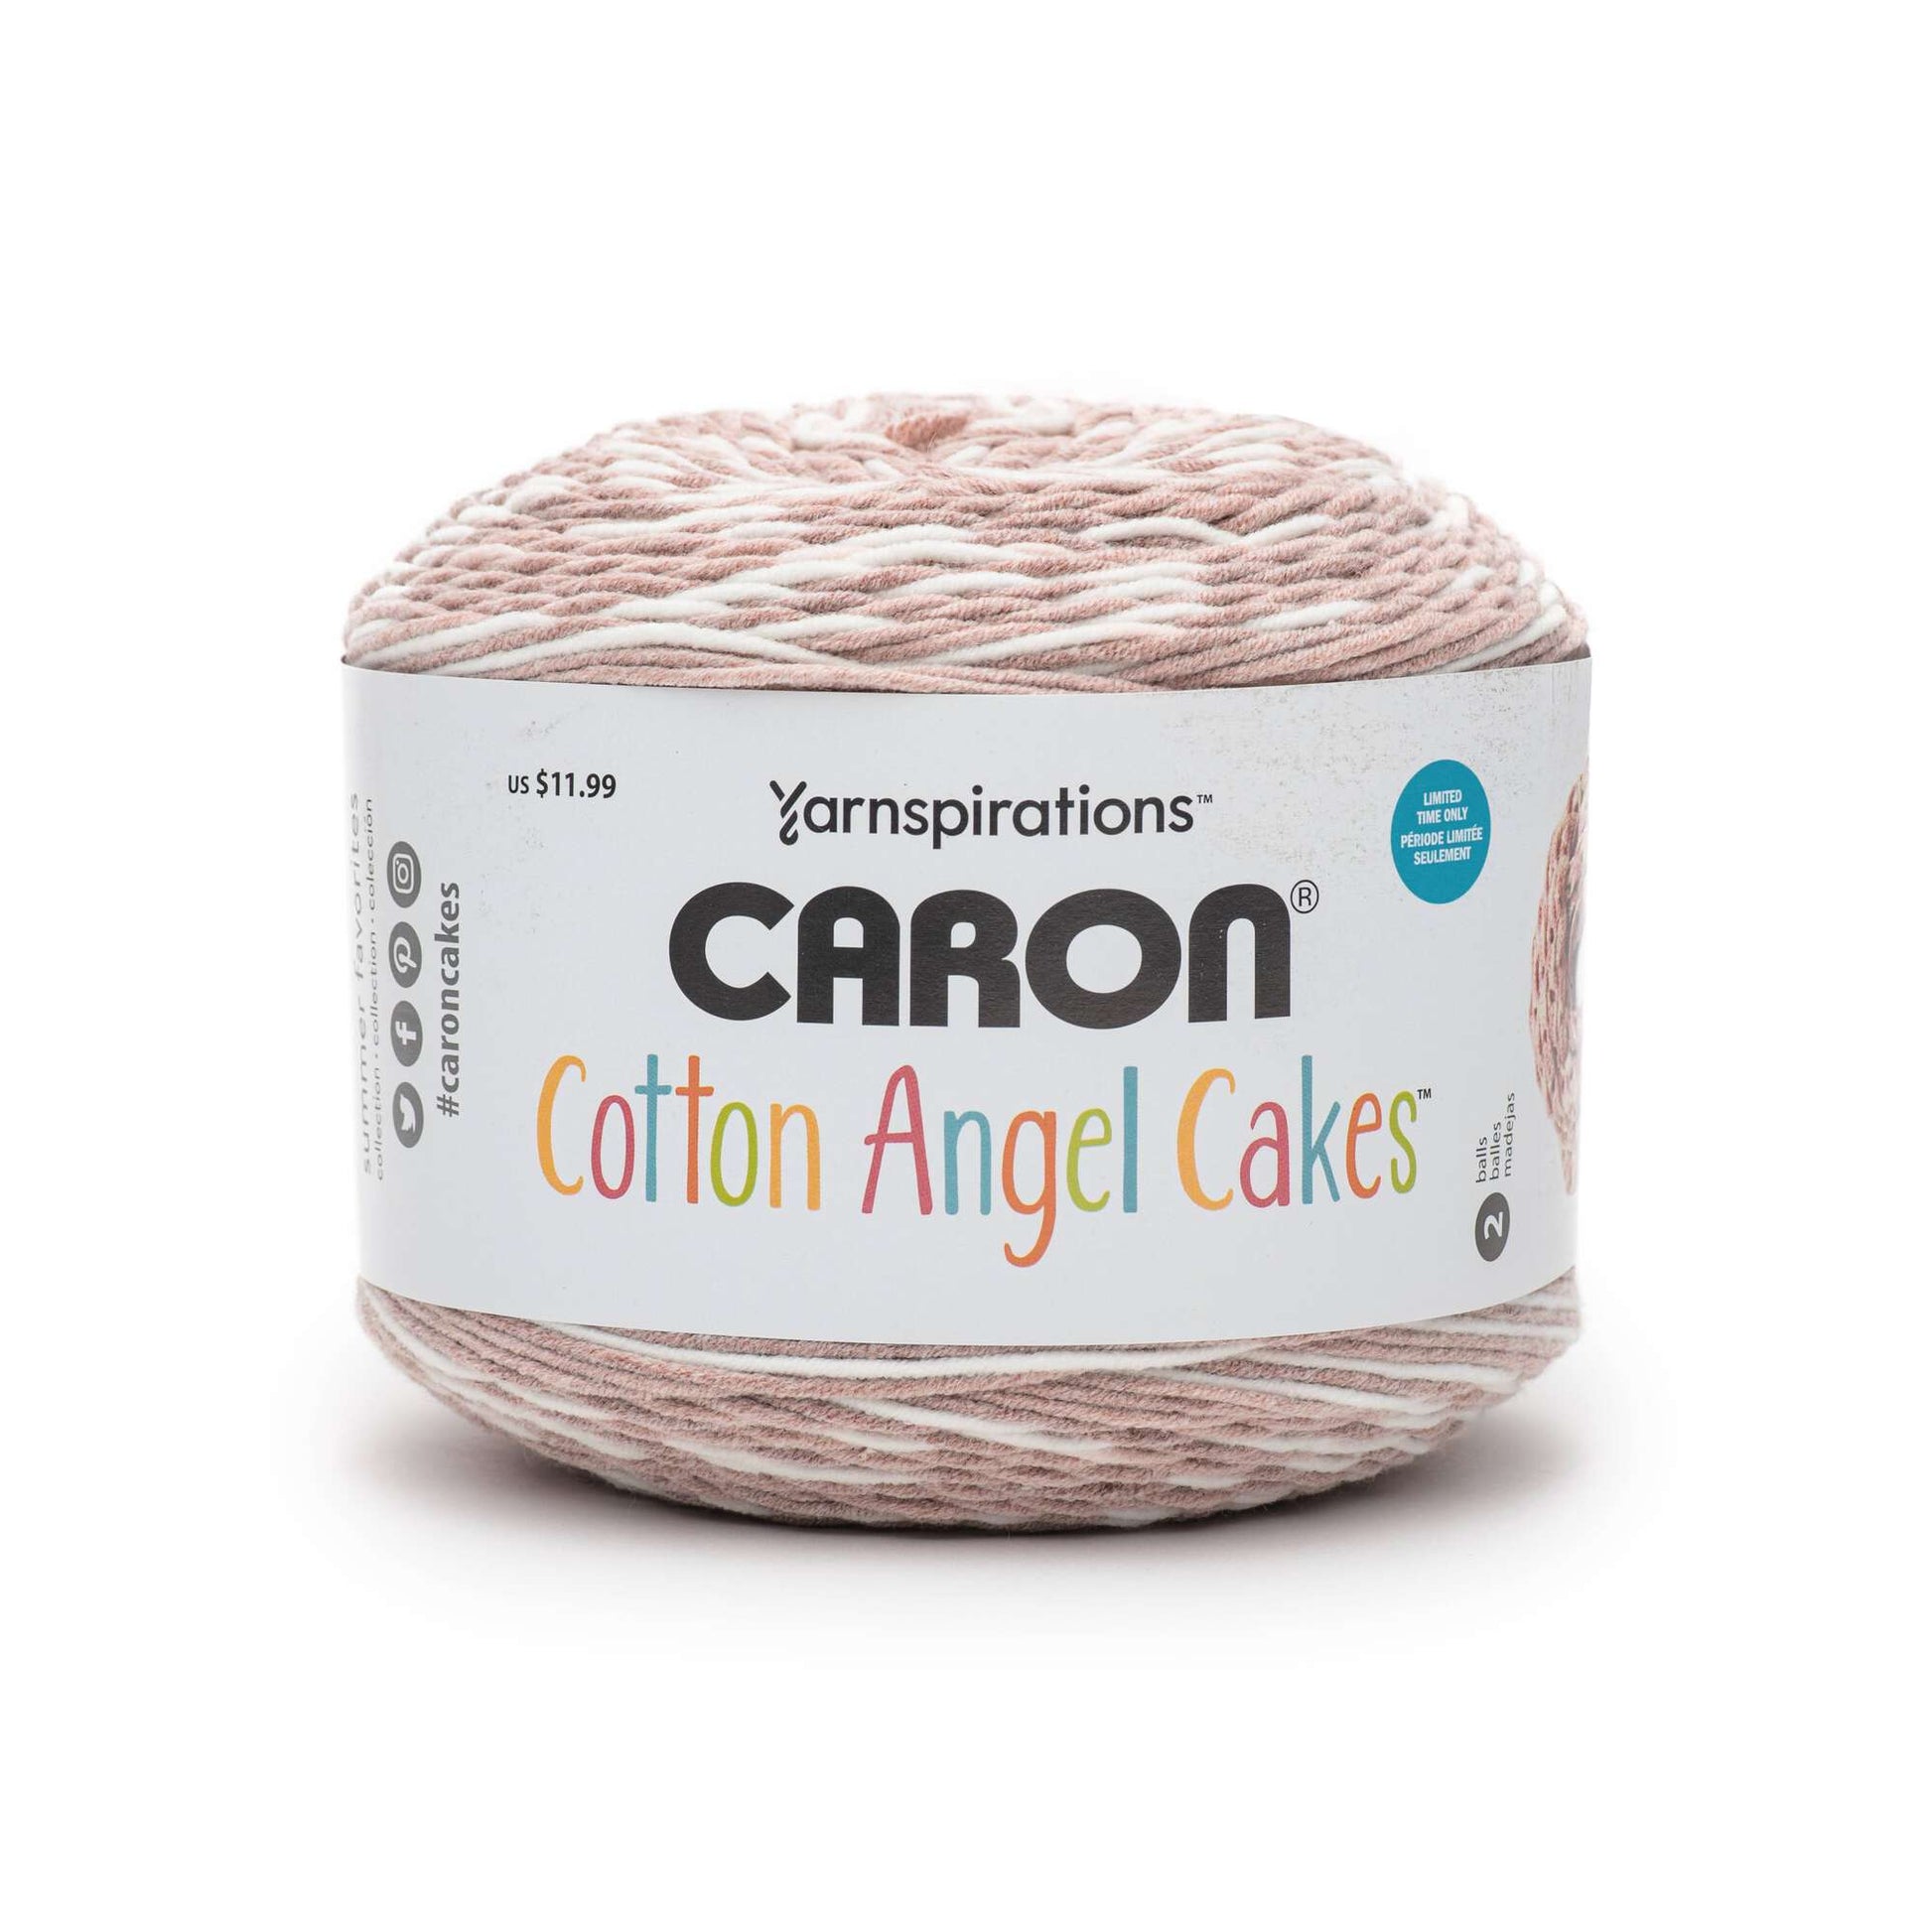 Cotton Yarn, Yarnspirations' Caron Cotton Cakes Review